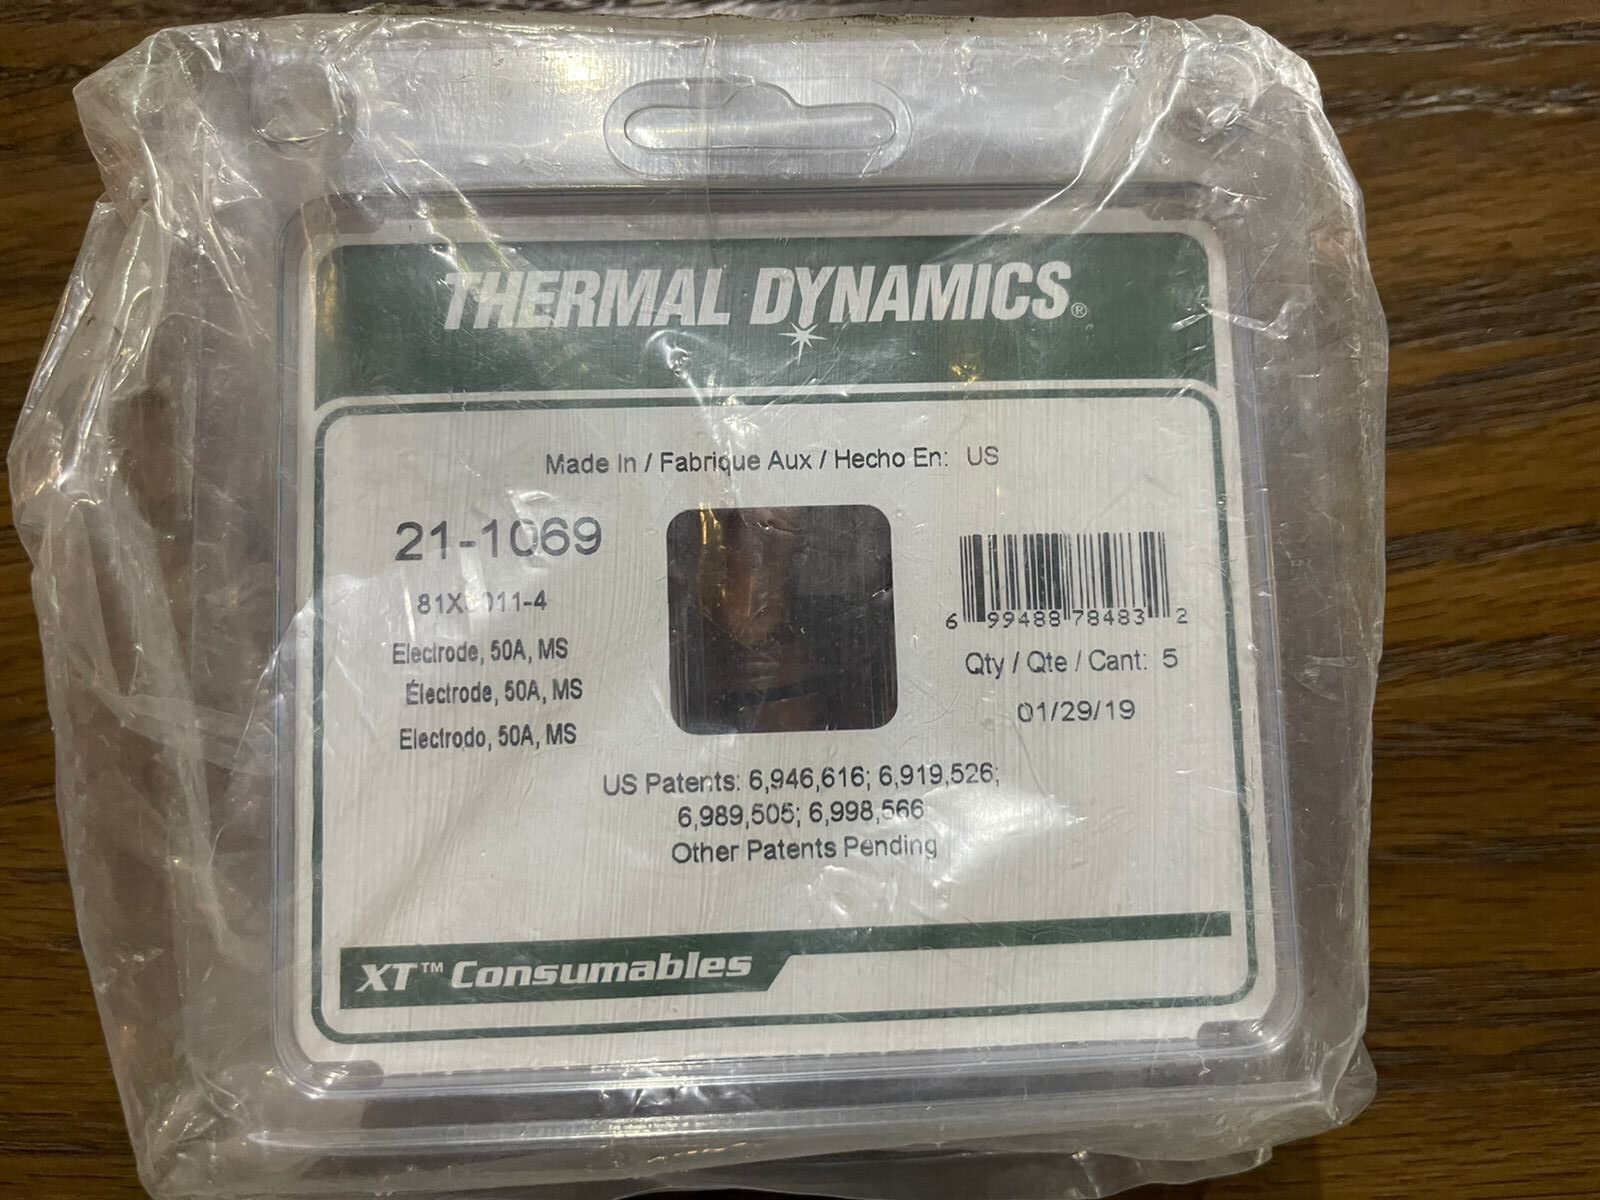 Thermal Dynamics XT Consumables 21-1069